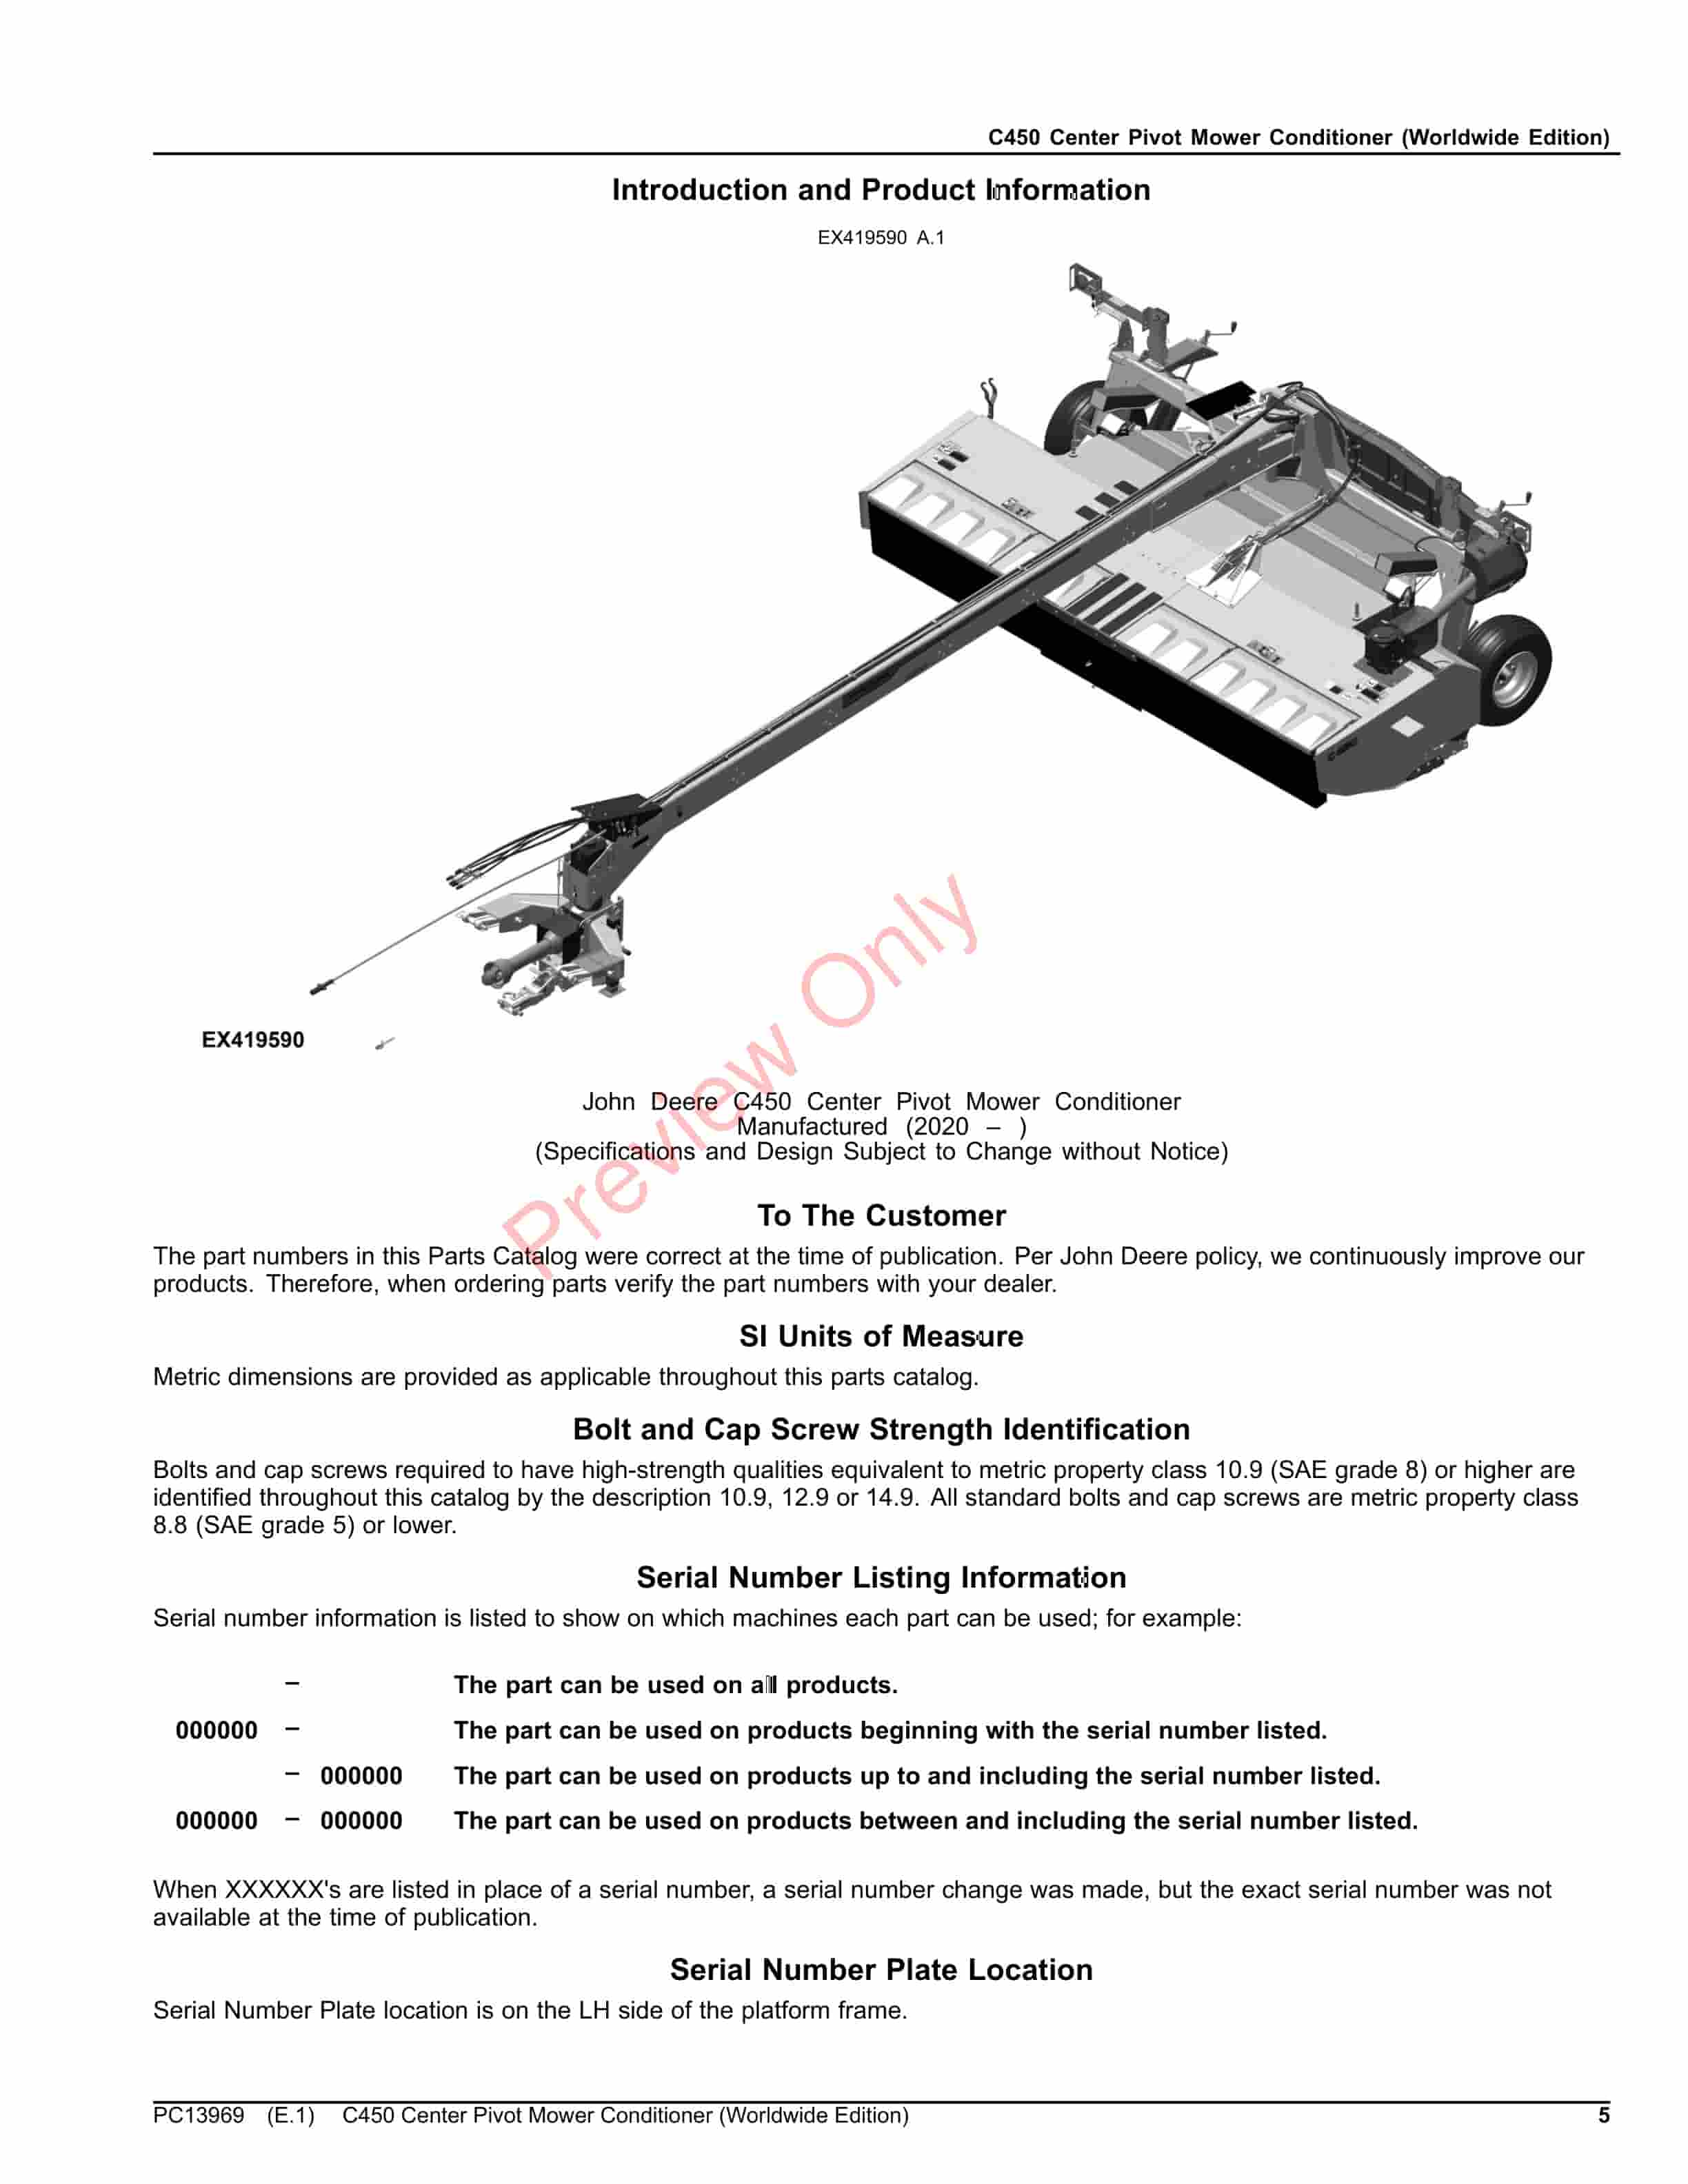 John Deere C450 Center Pivot Mower Conditioner Parts Catalog PC13969 22AUG23-5